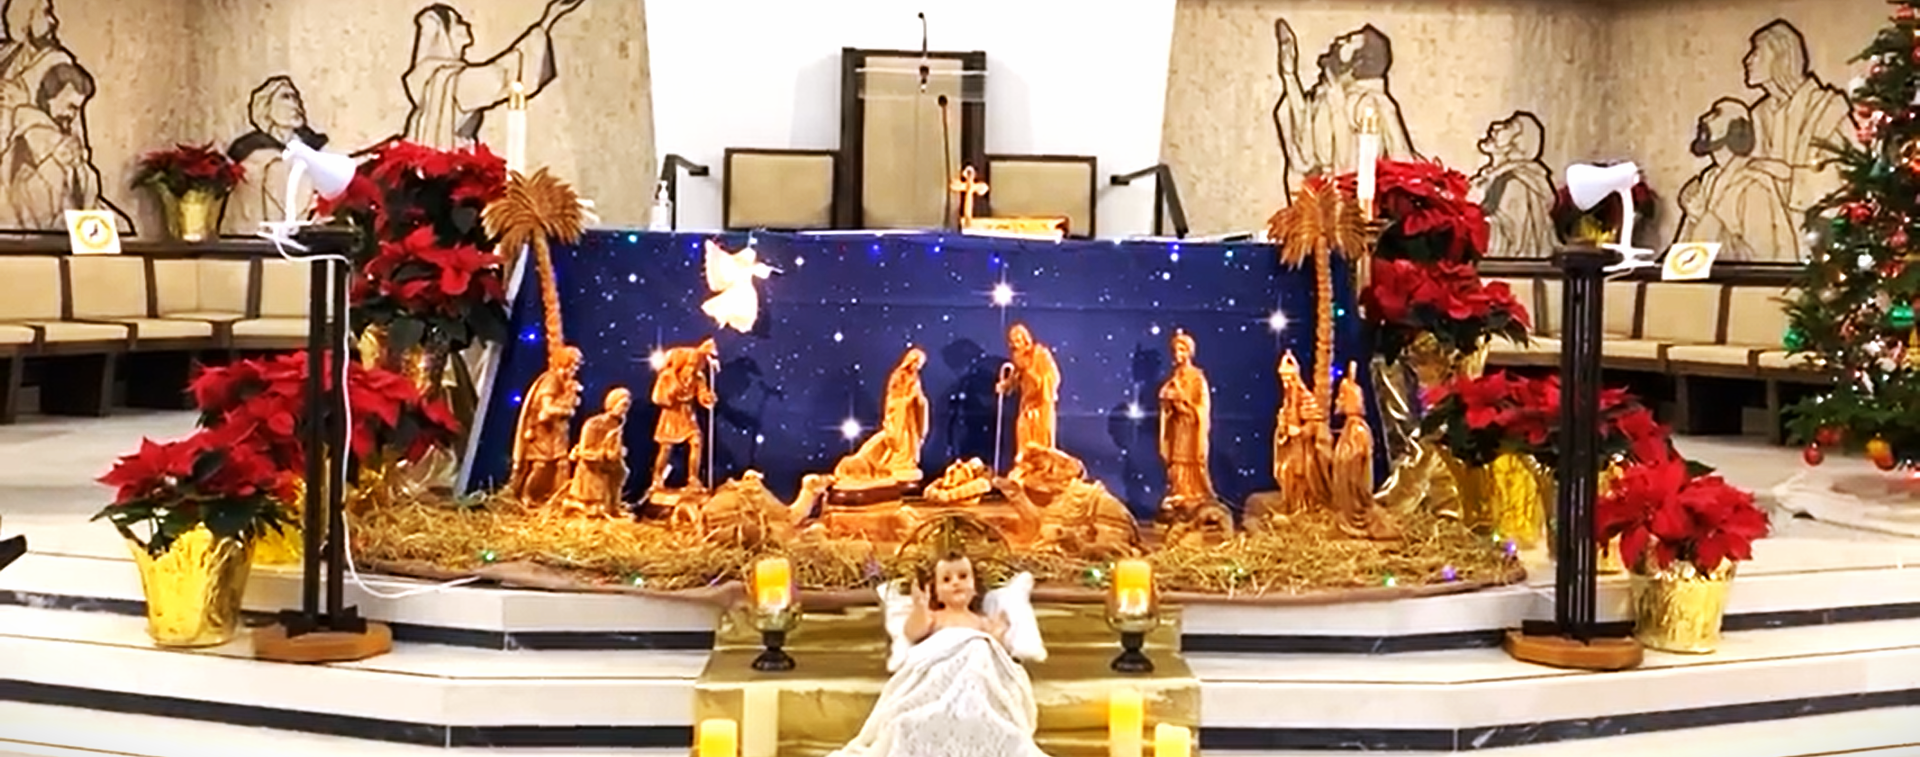 St. Wilfrid's Church Nativity Scene Banner